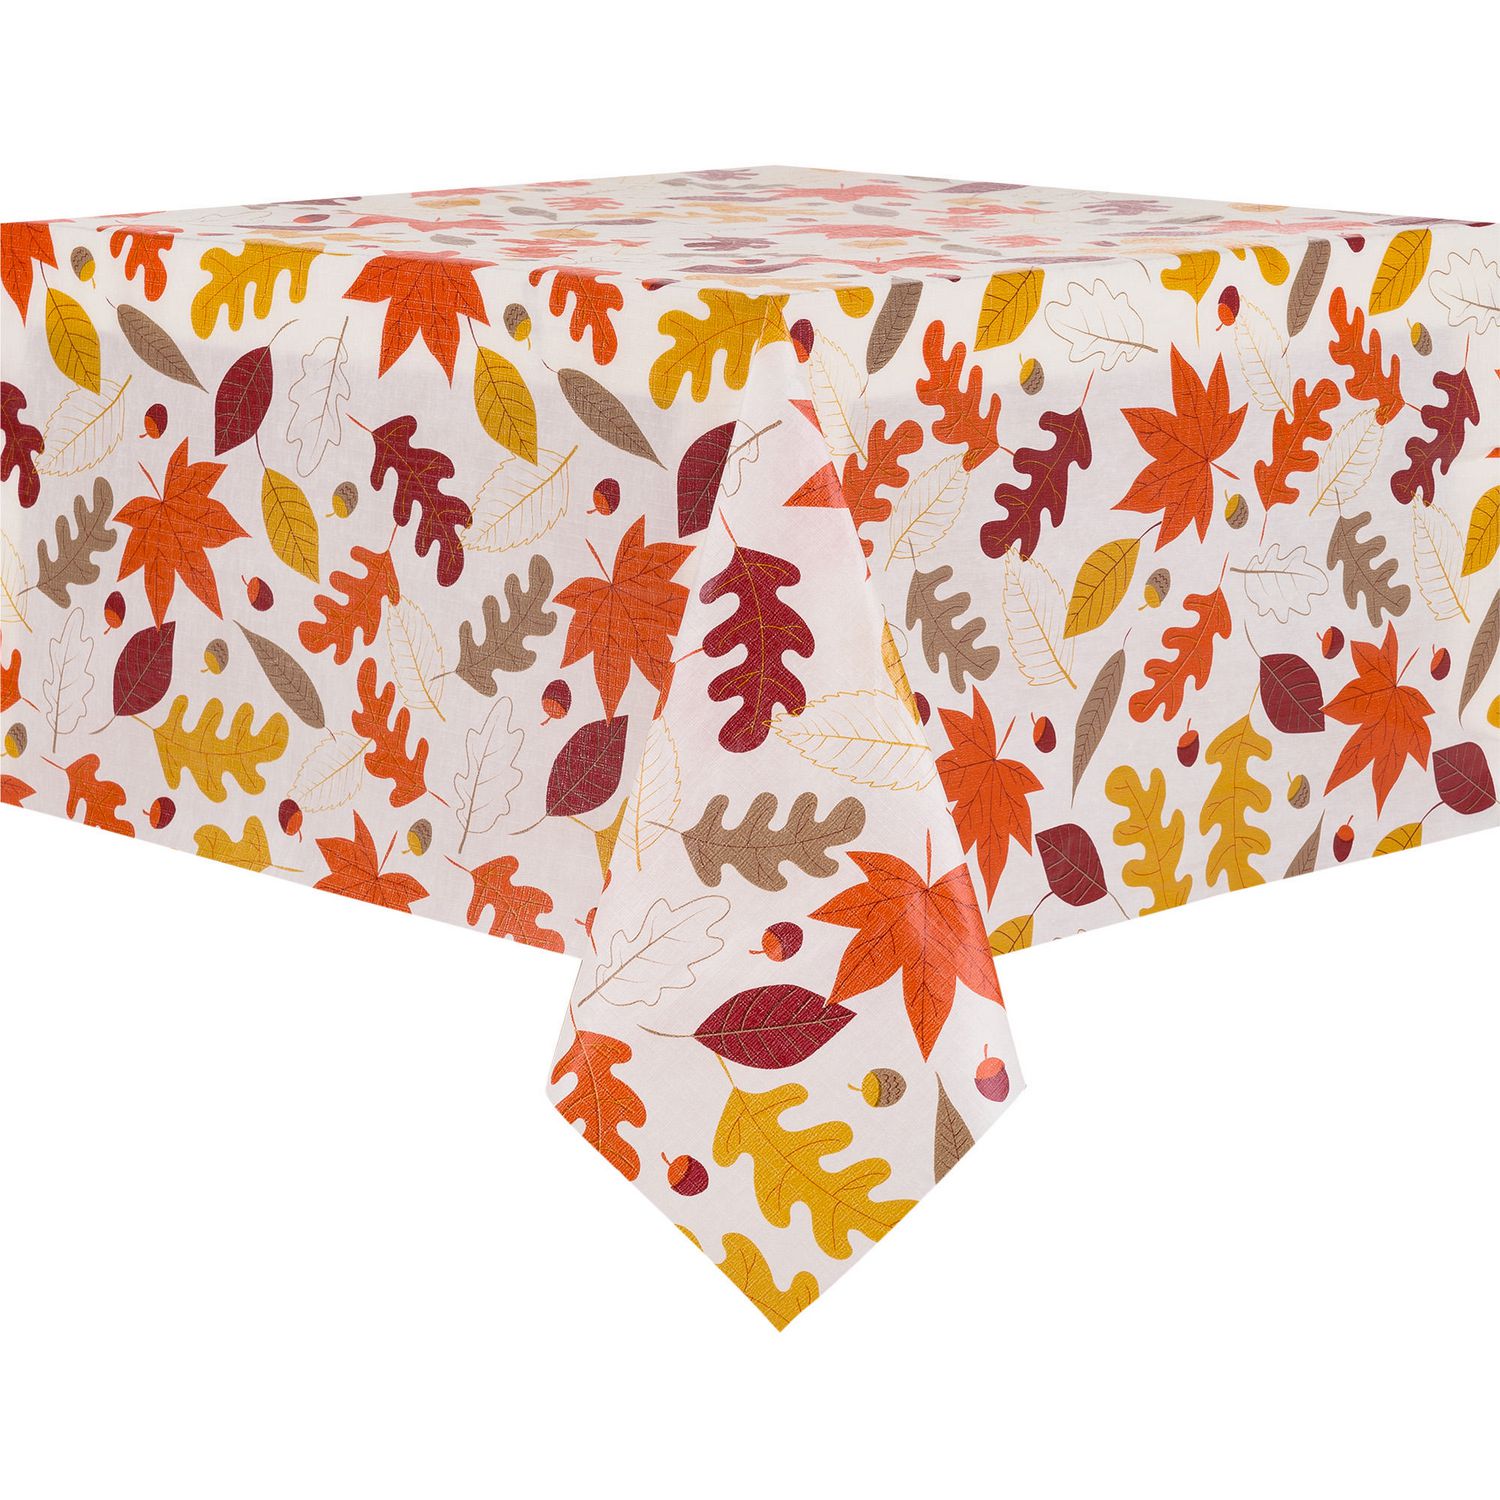 Harvest Peva Flannel-Backed Leaf Design Tablecloth | Walmart Canada